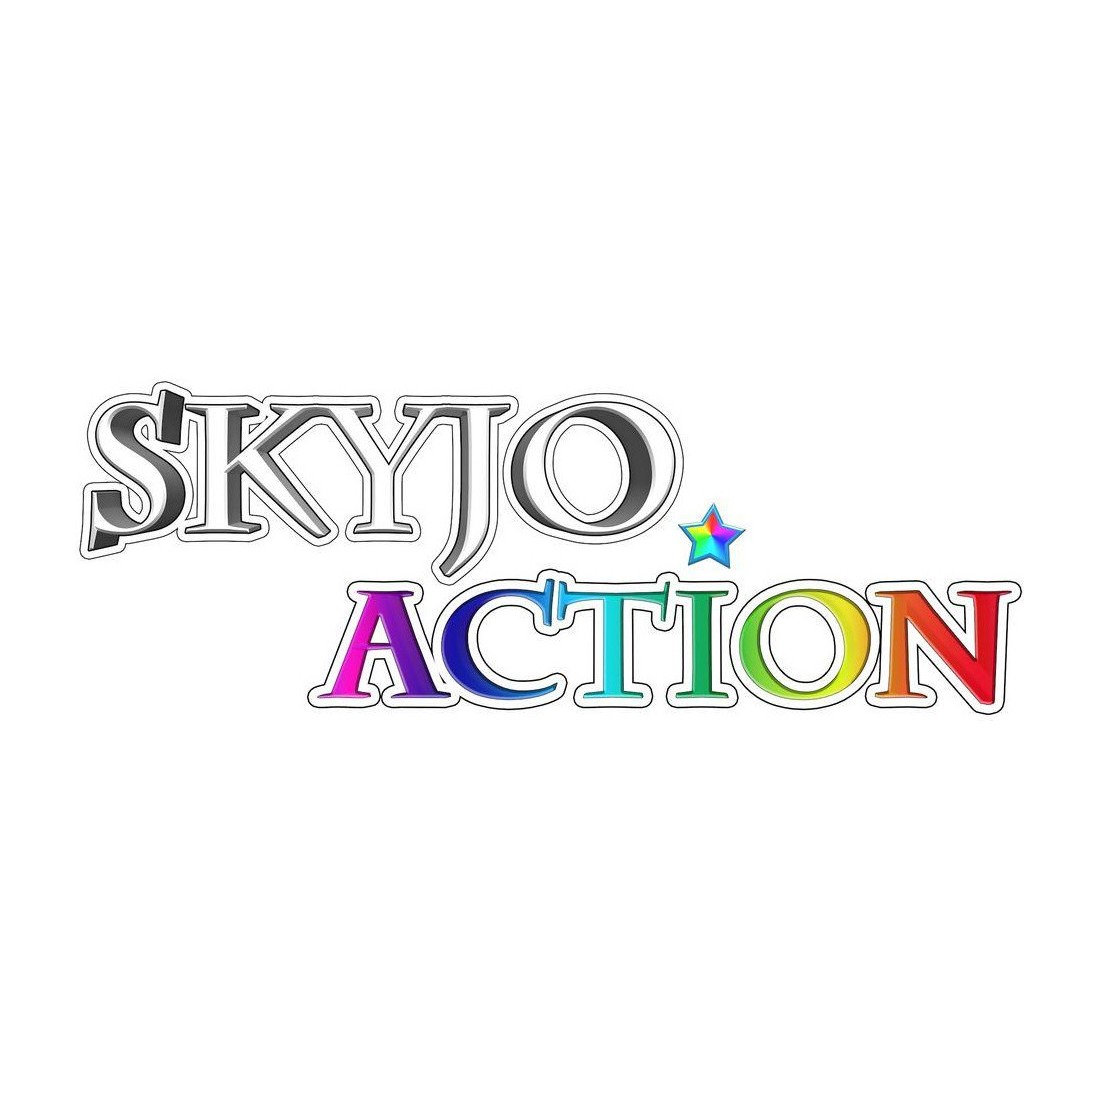 Skyjo Action - Master Yeti